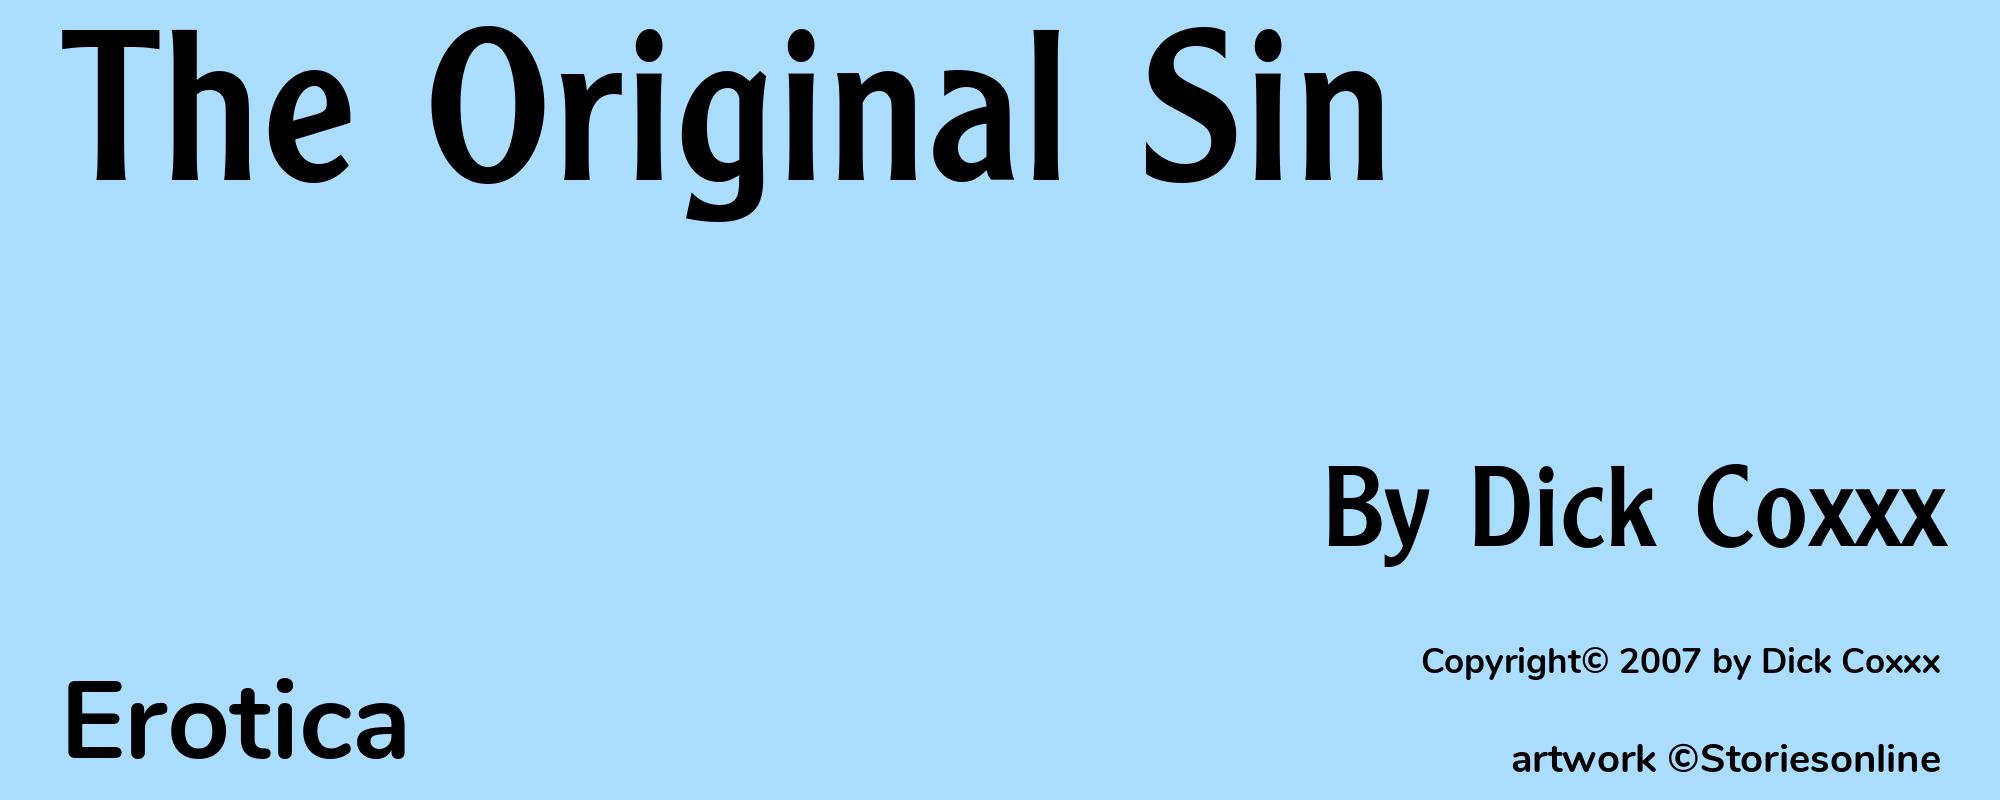 The Original Sin - Cover